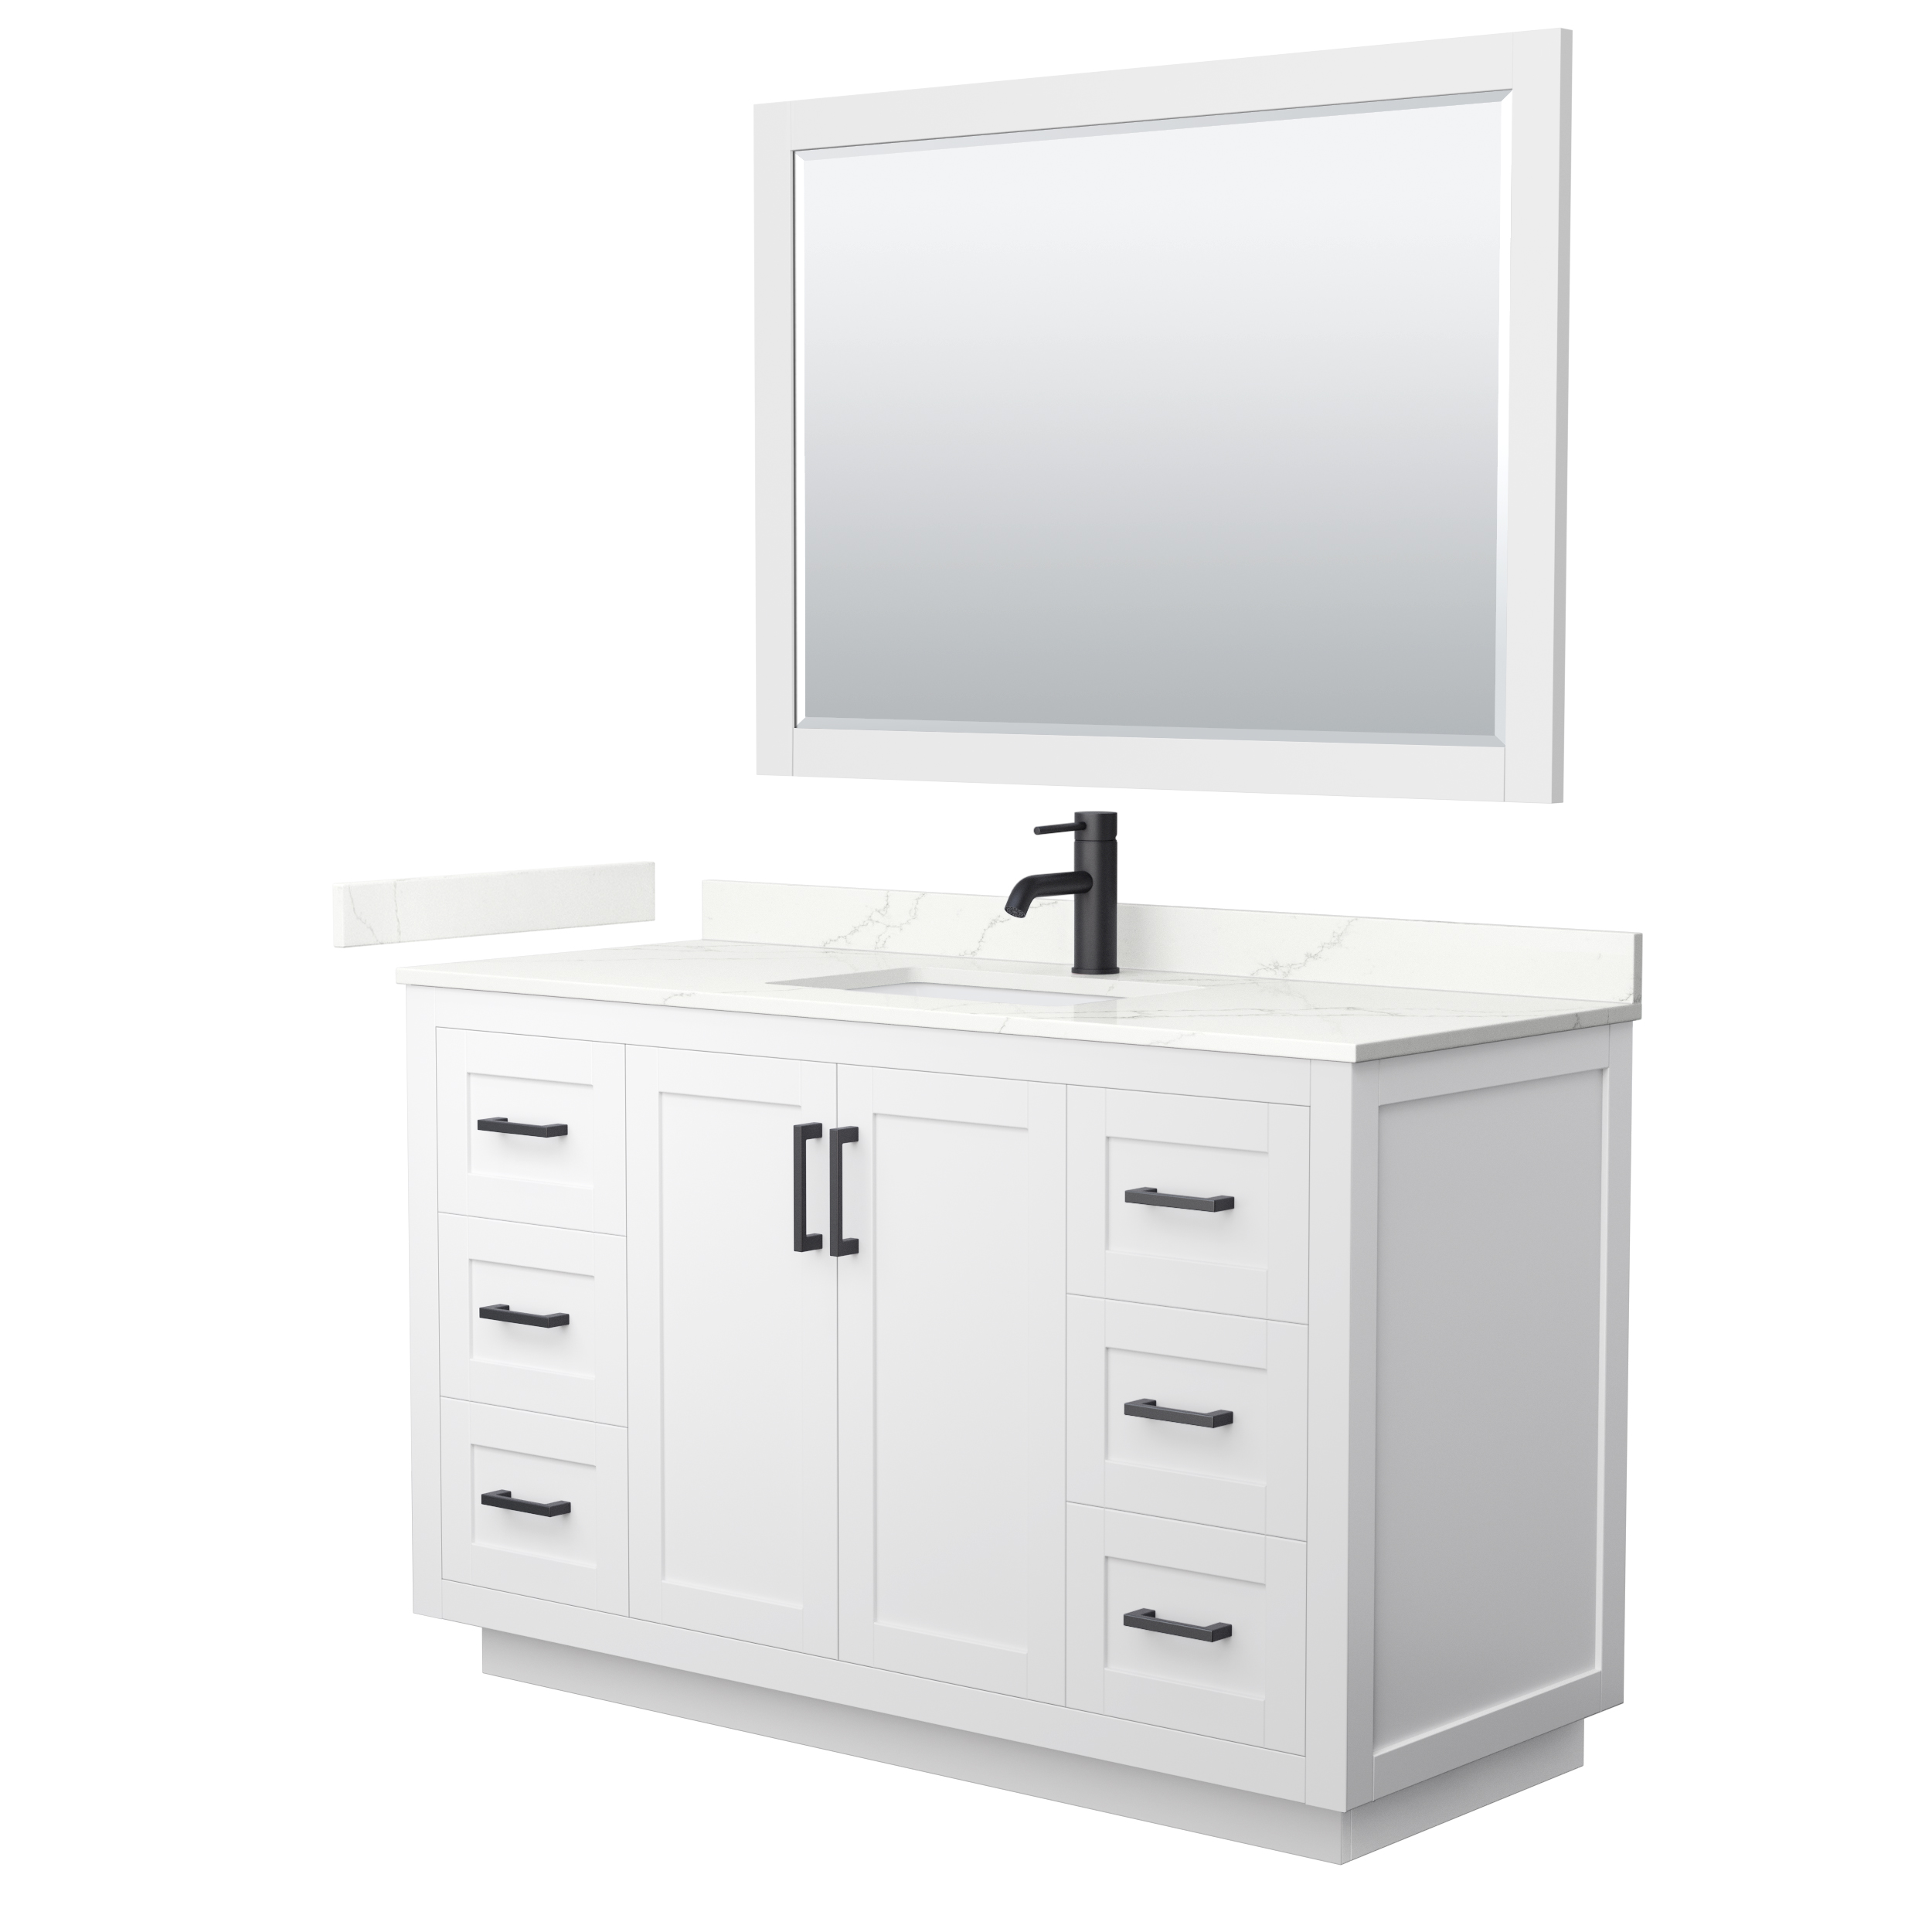 Miranda 54" Single Vanity with optional Quartz or Carrara Marble Counter - White WC-2929-54-SGL-VAN-WHT__